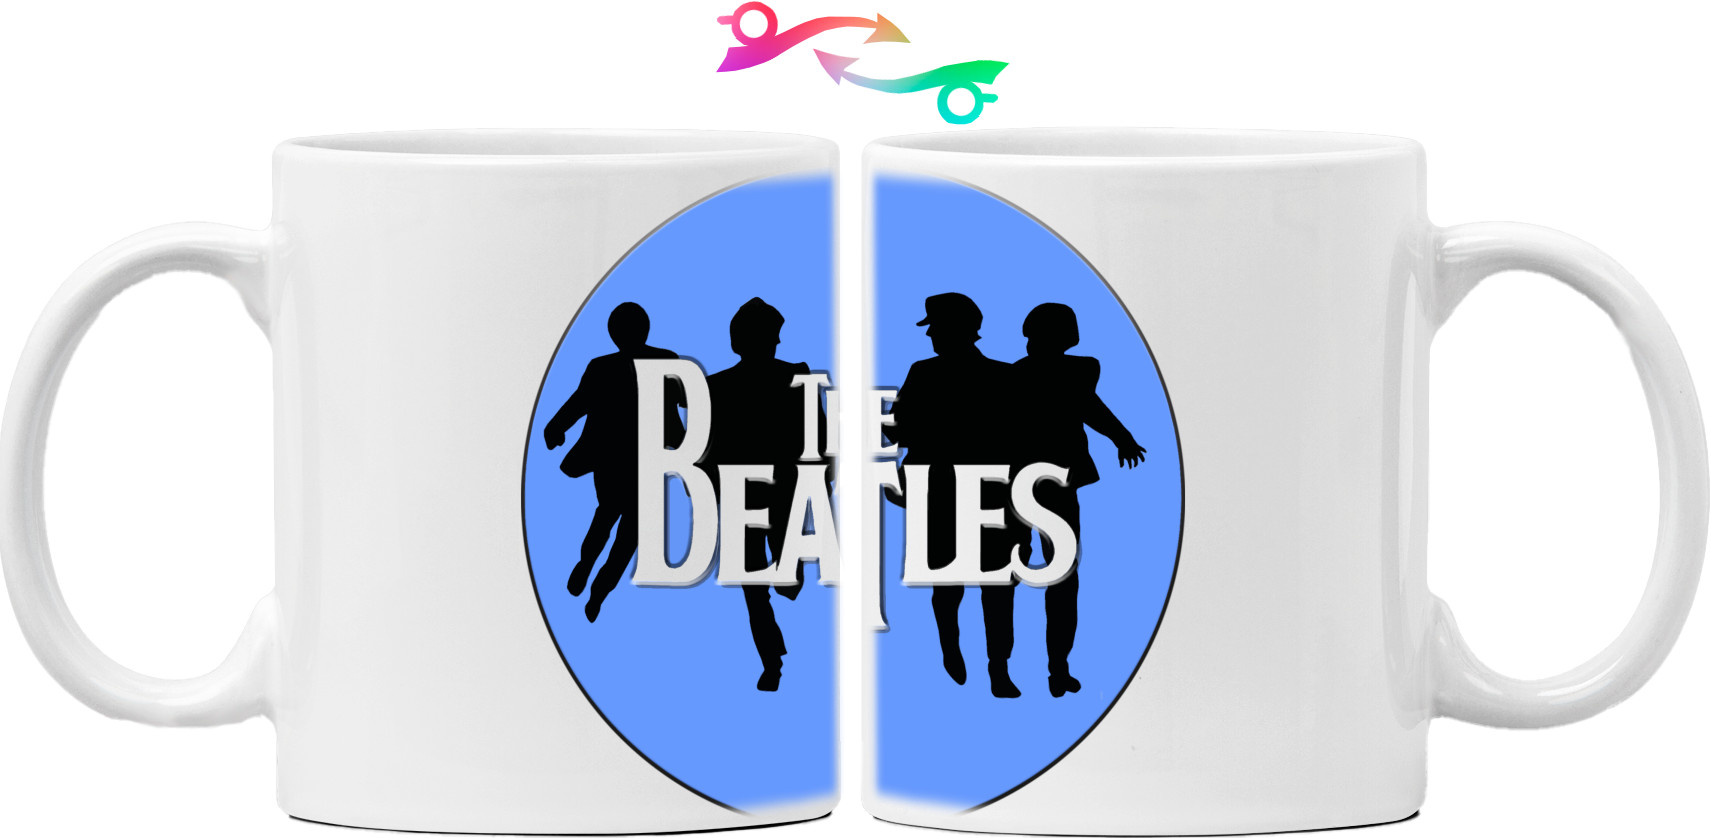 The Beatles 11